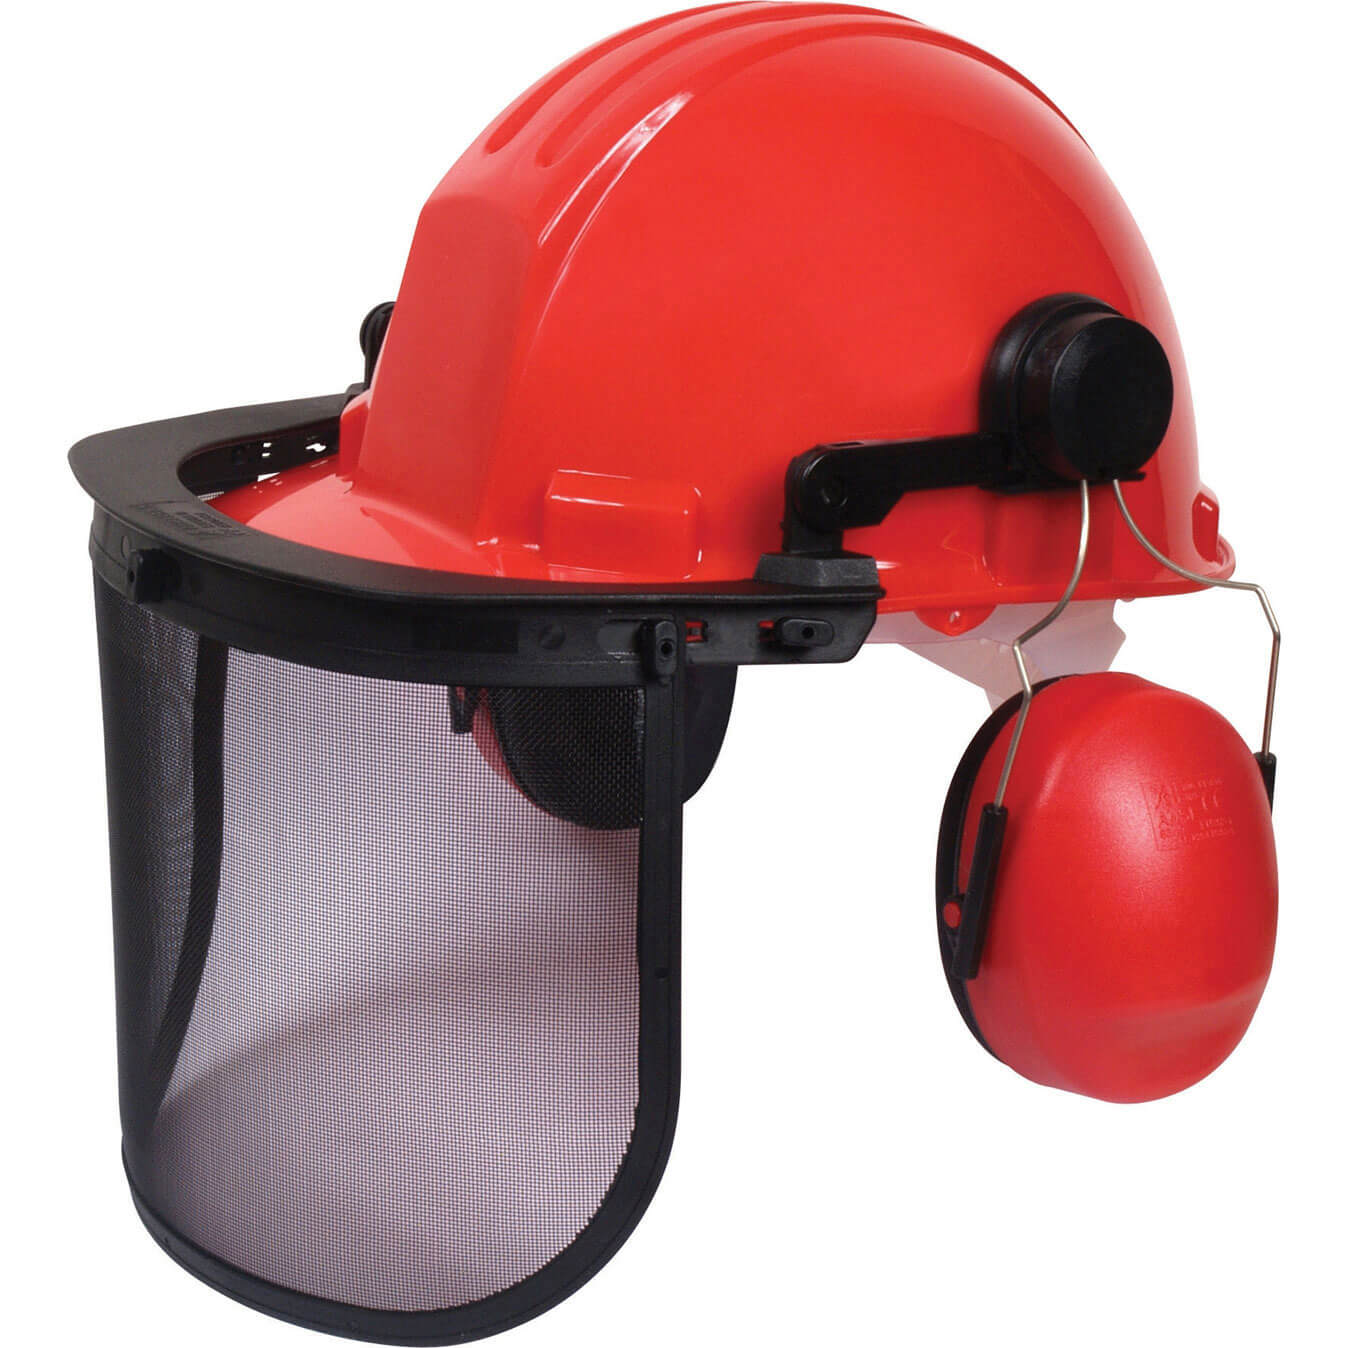 Vitrex Forestry Safety Helmet Kit